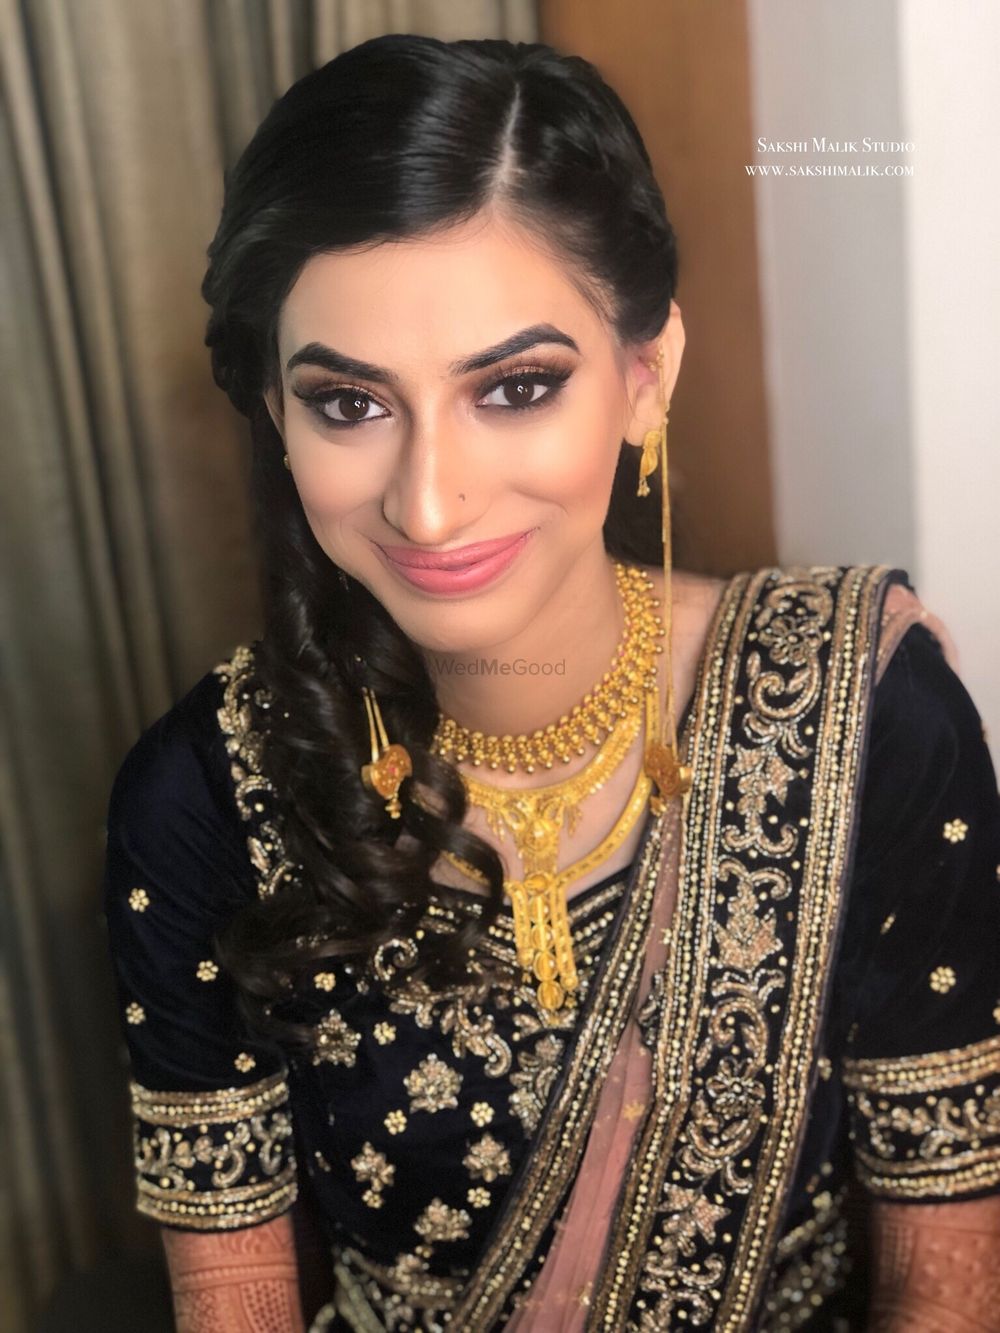 Photo From Weddings 2018 - By Sakshi Malik Studio